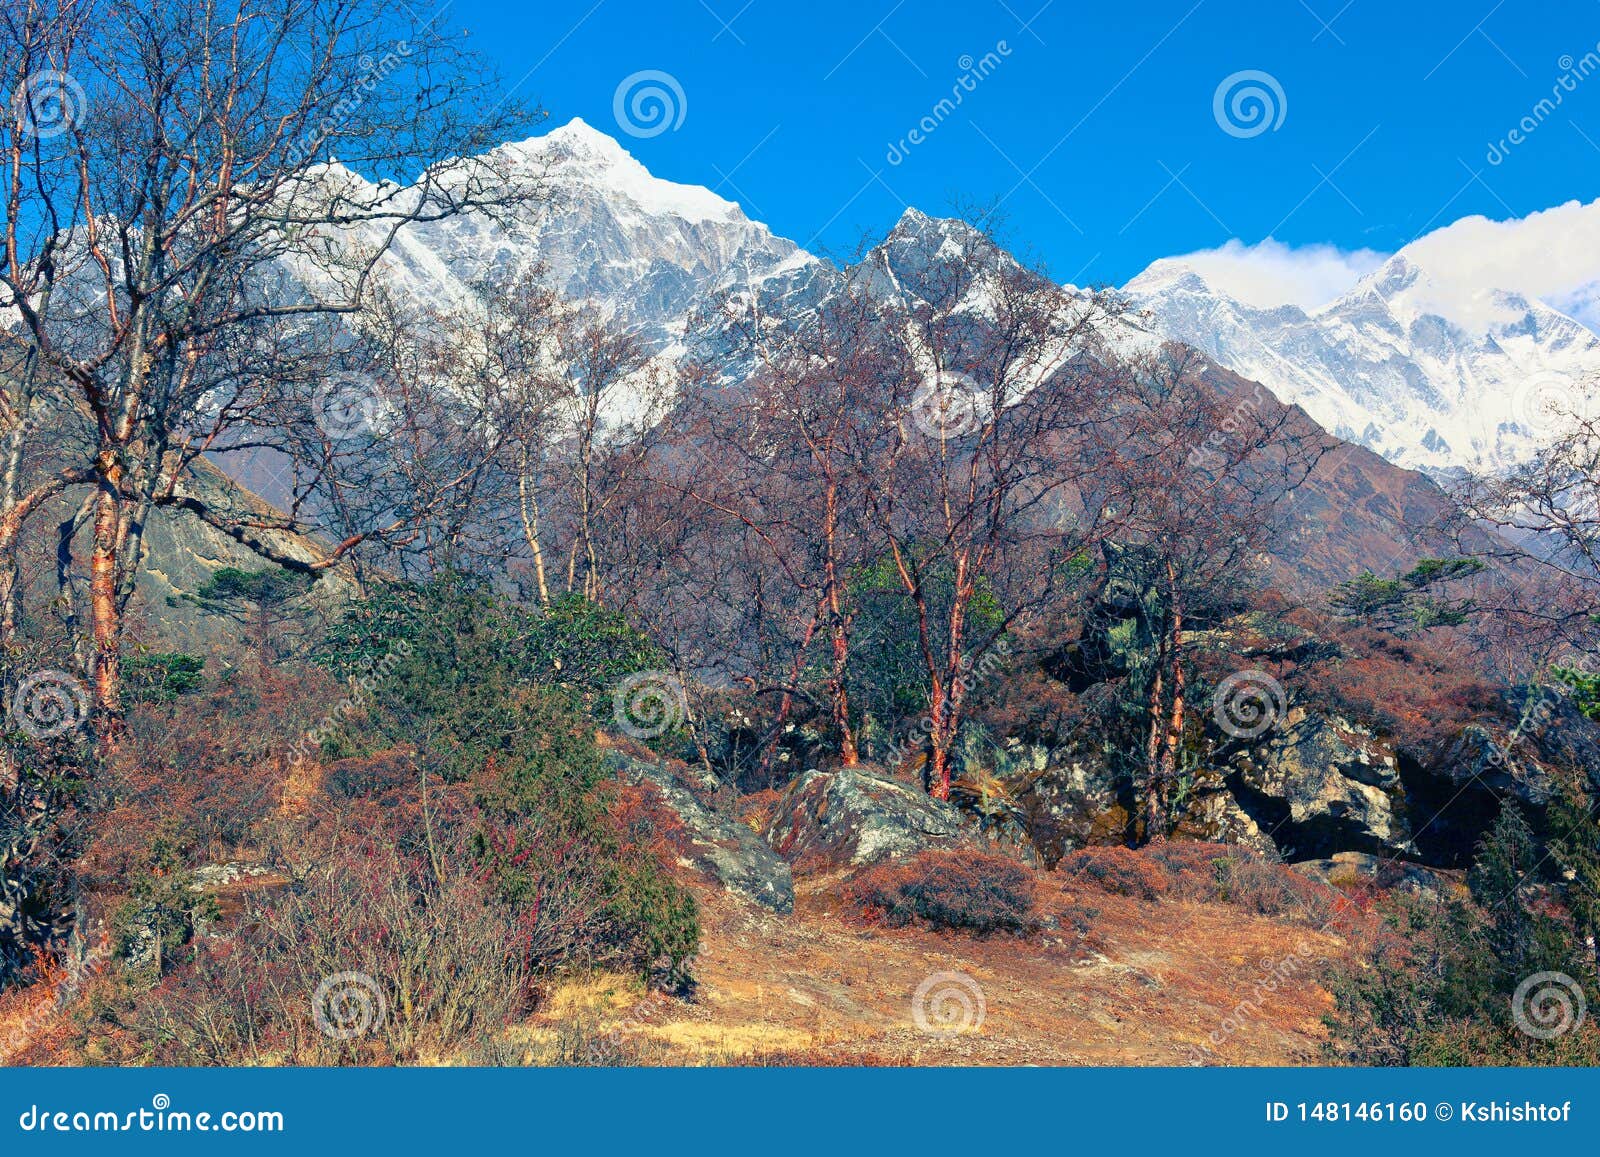 beautiful mountain landscape of sagarmatha national park. solu khumbu, sagarmatha np, nepal